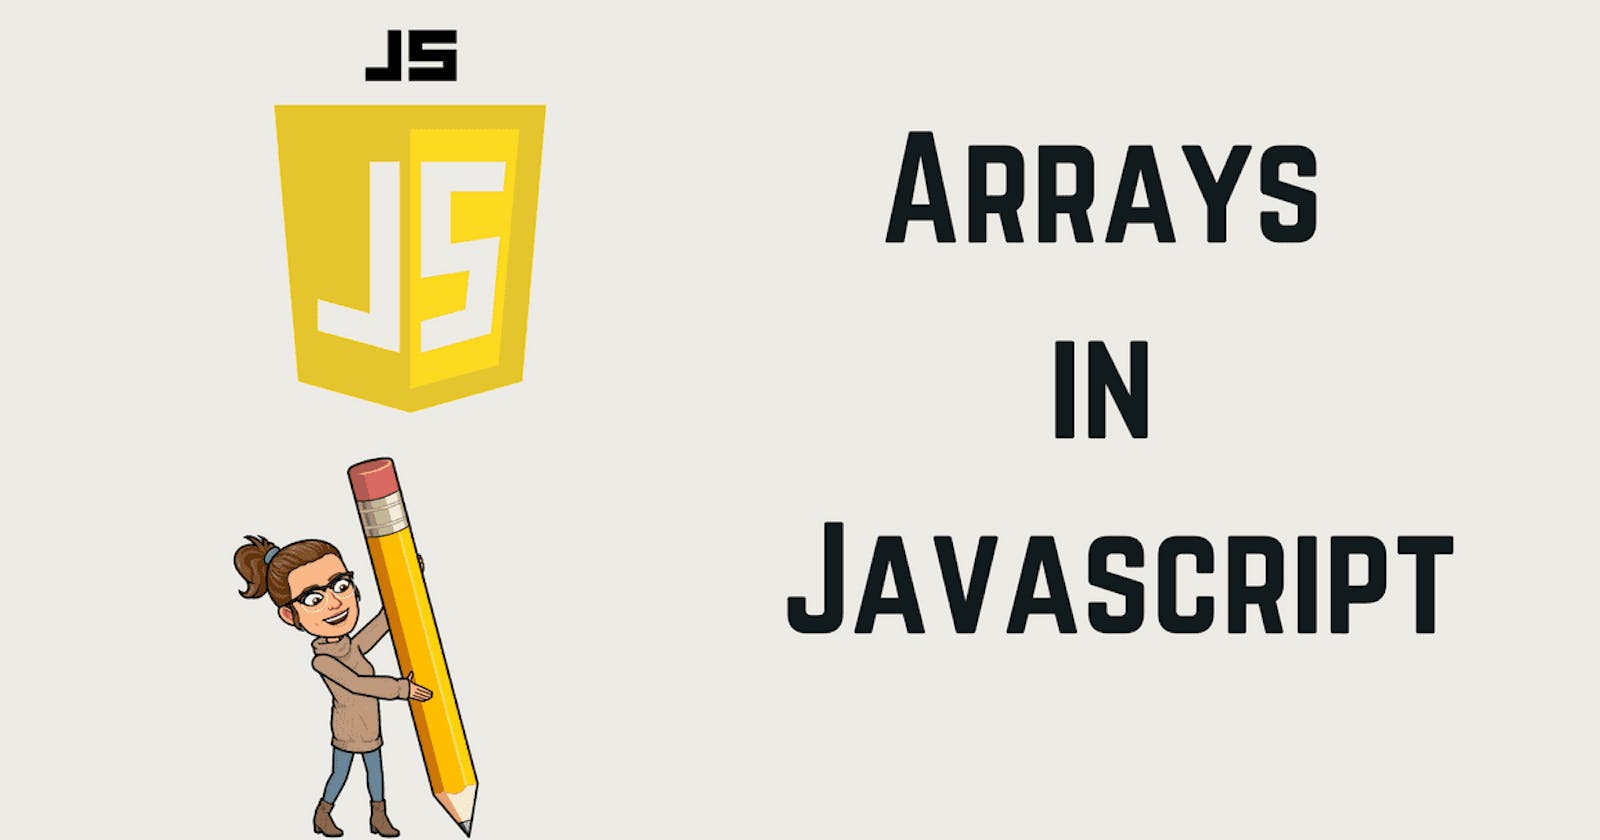 Arrays In Javascript